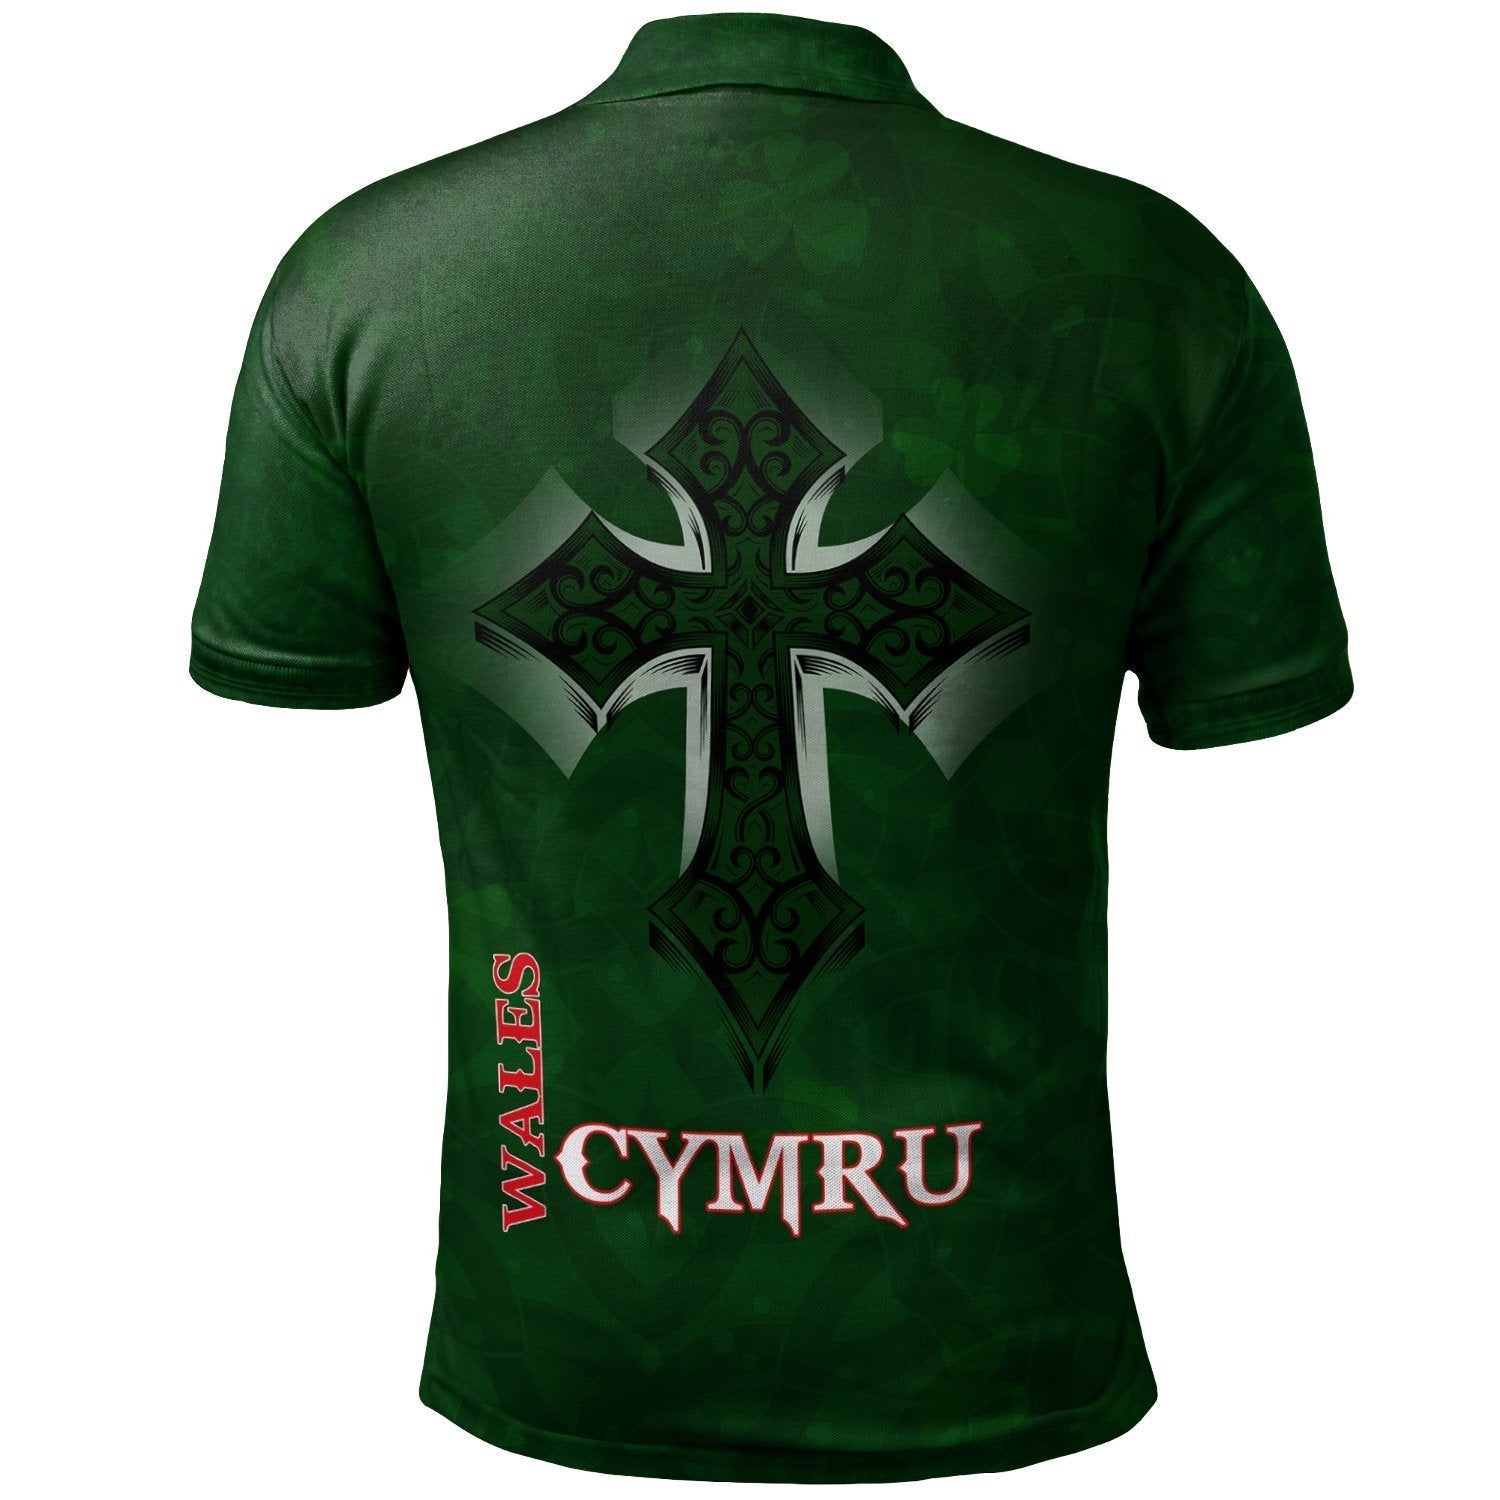 wales-polo-shirt-wales-cymru-celtic-cross